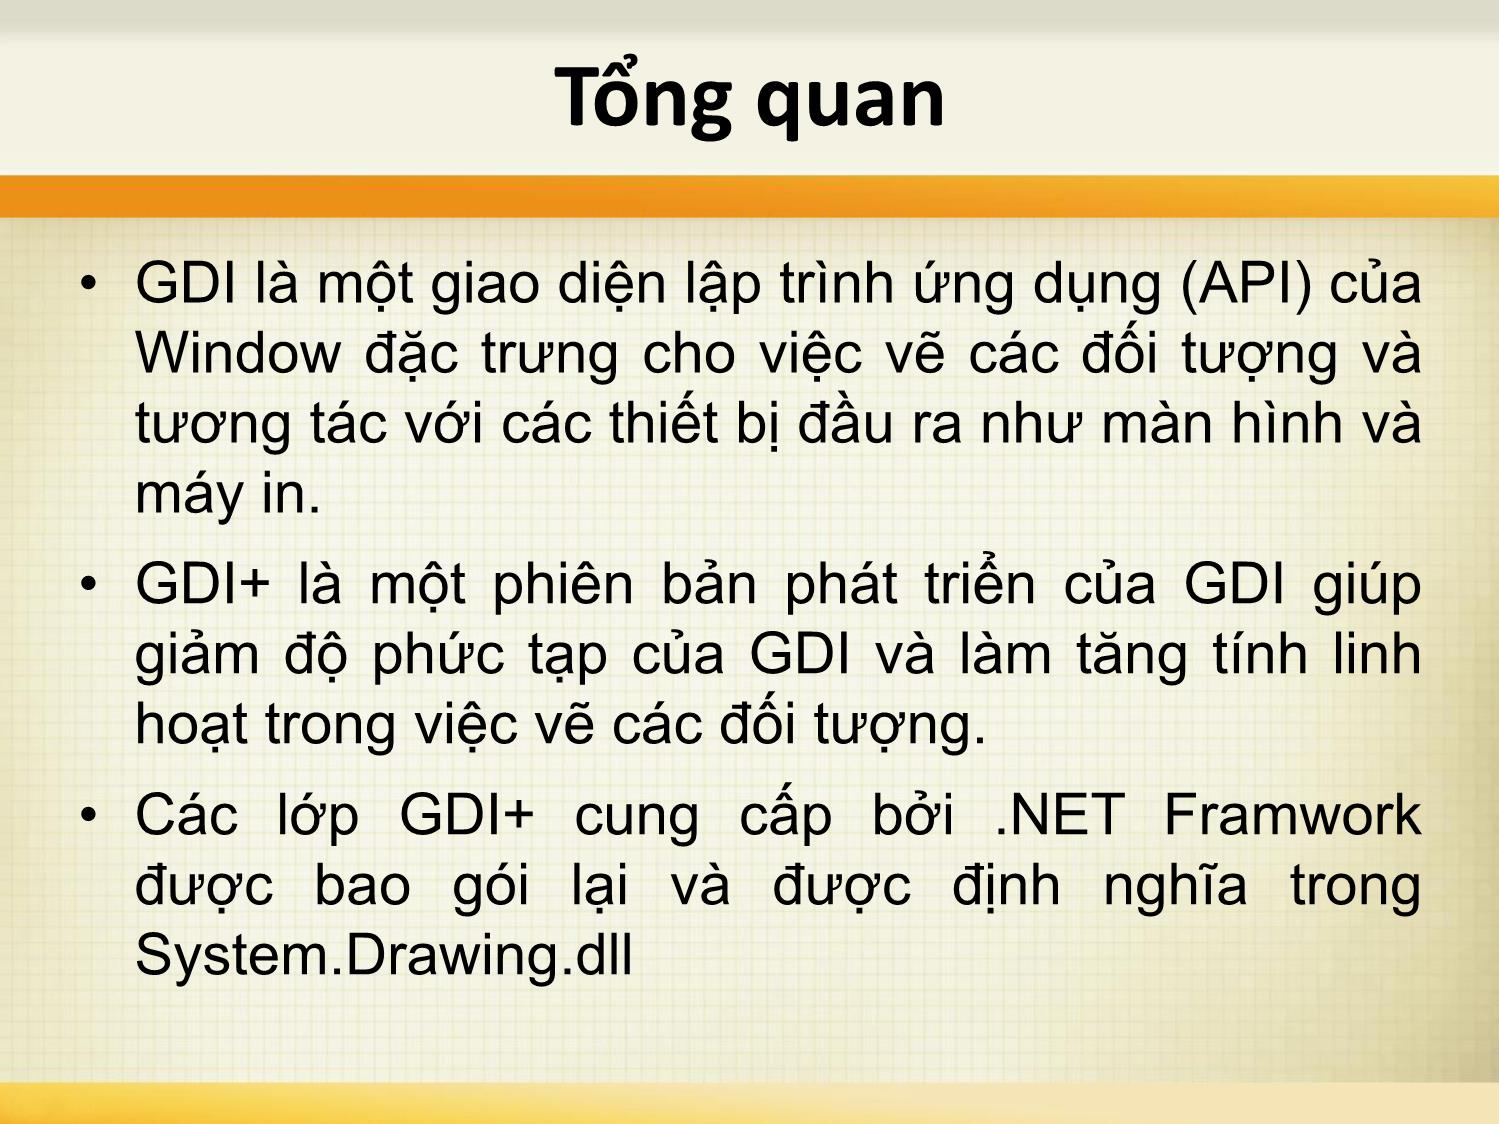 GDI+ (Graphic Device Interface) trang 2